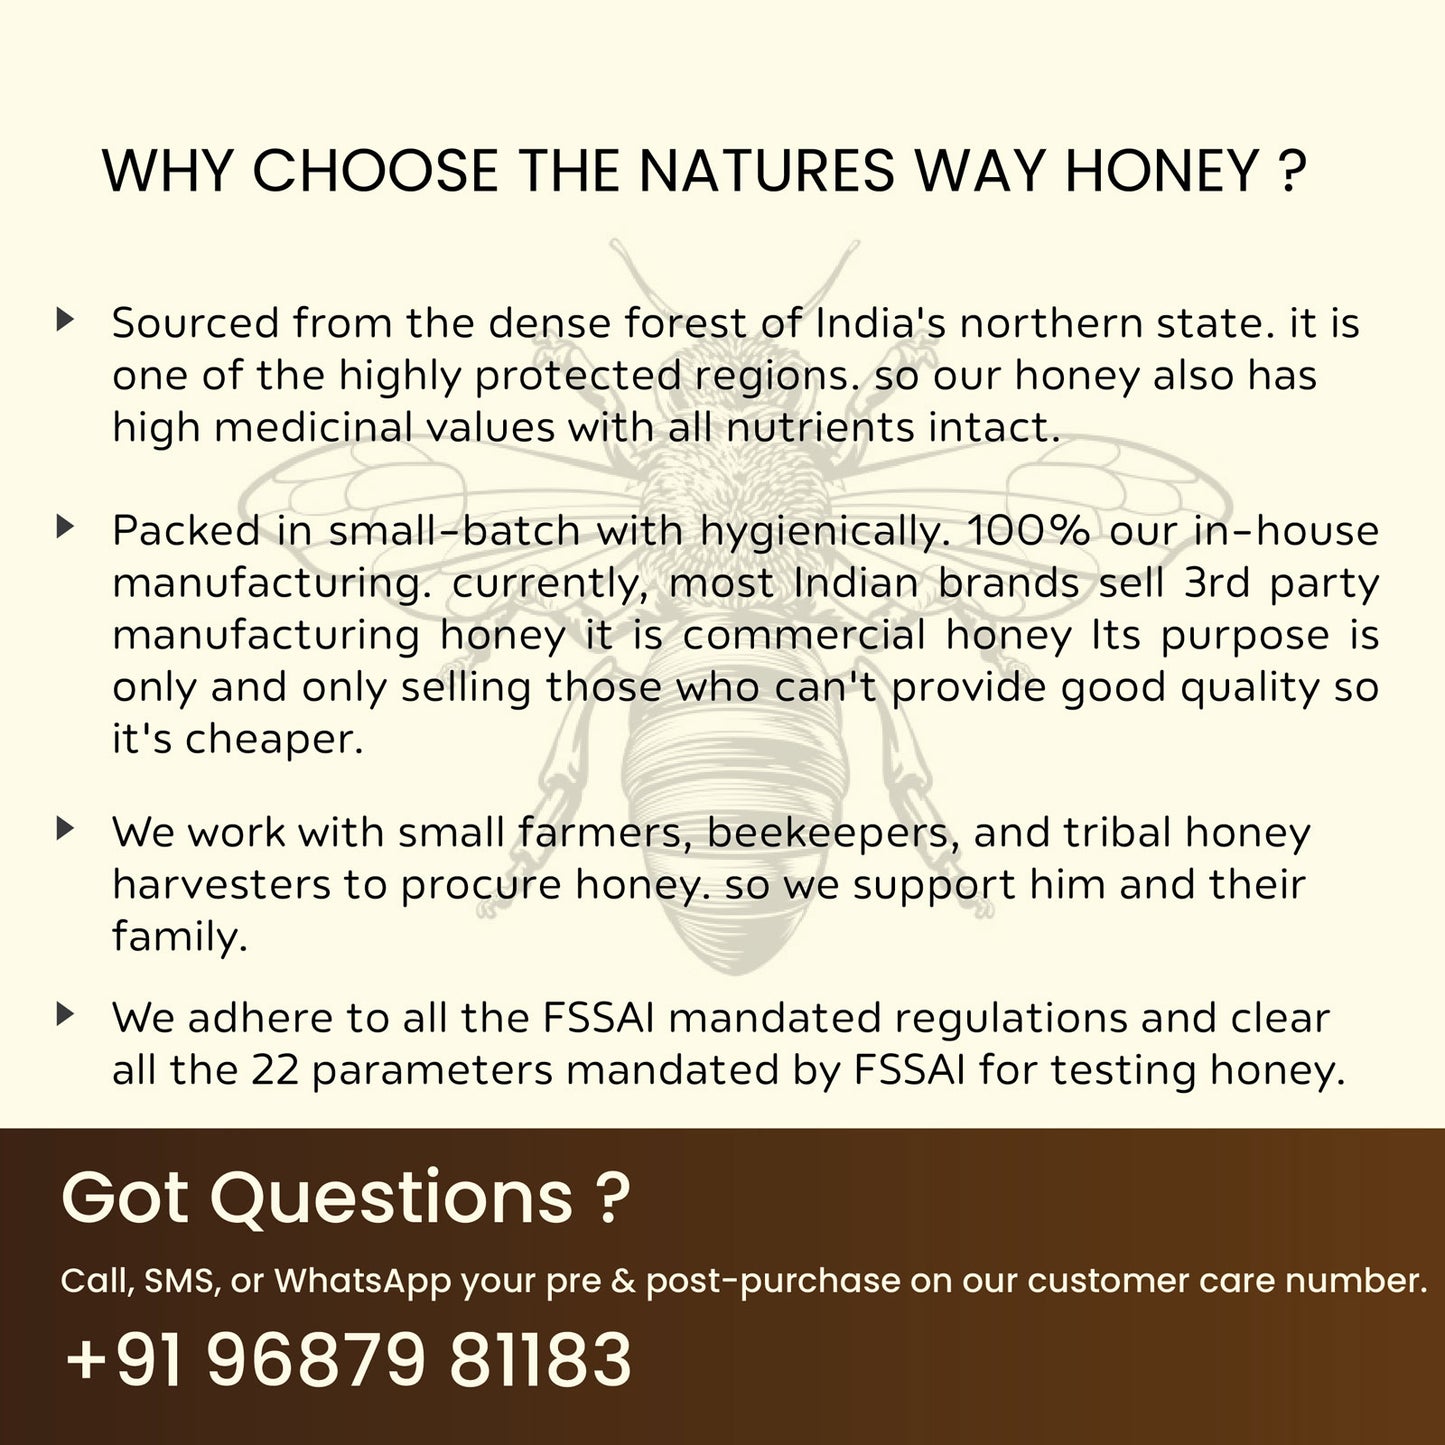 The Natures Way Wild Honey